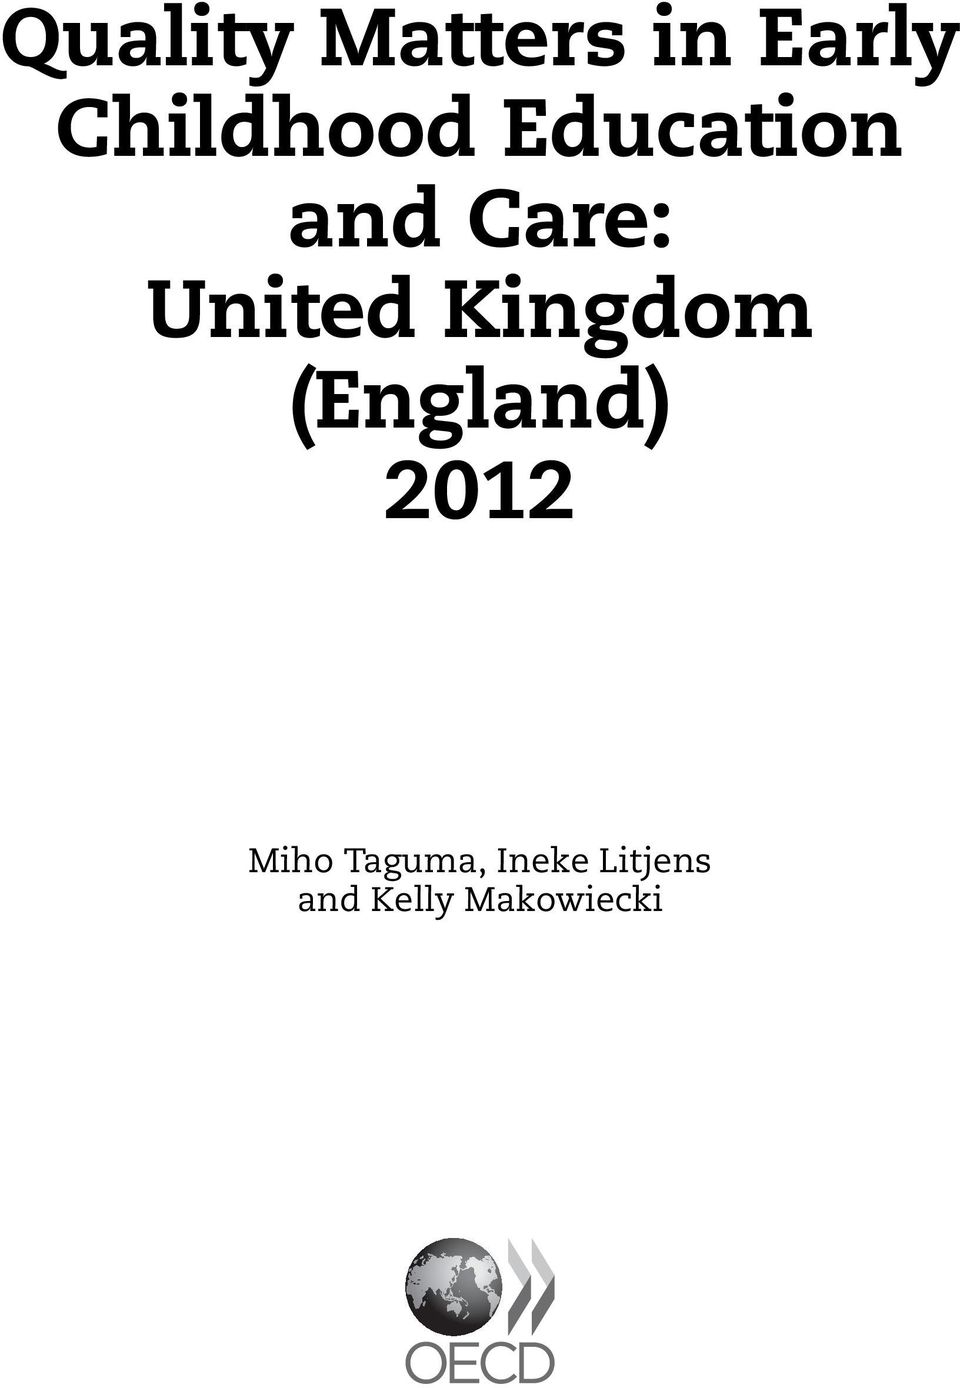 United Kingdom (England) 2012